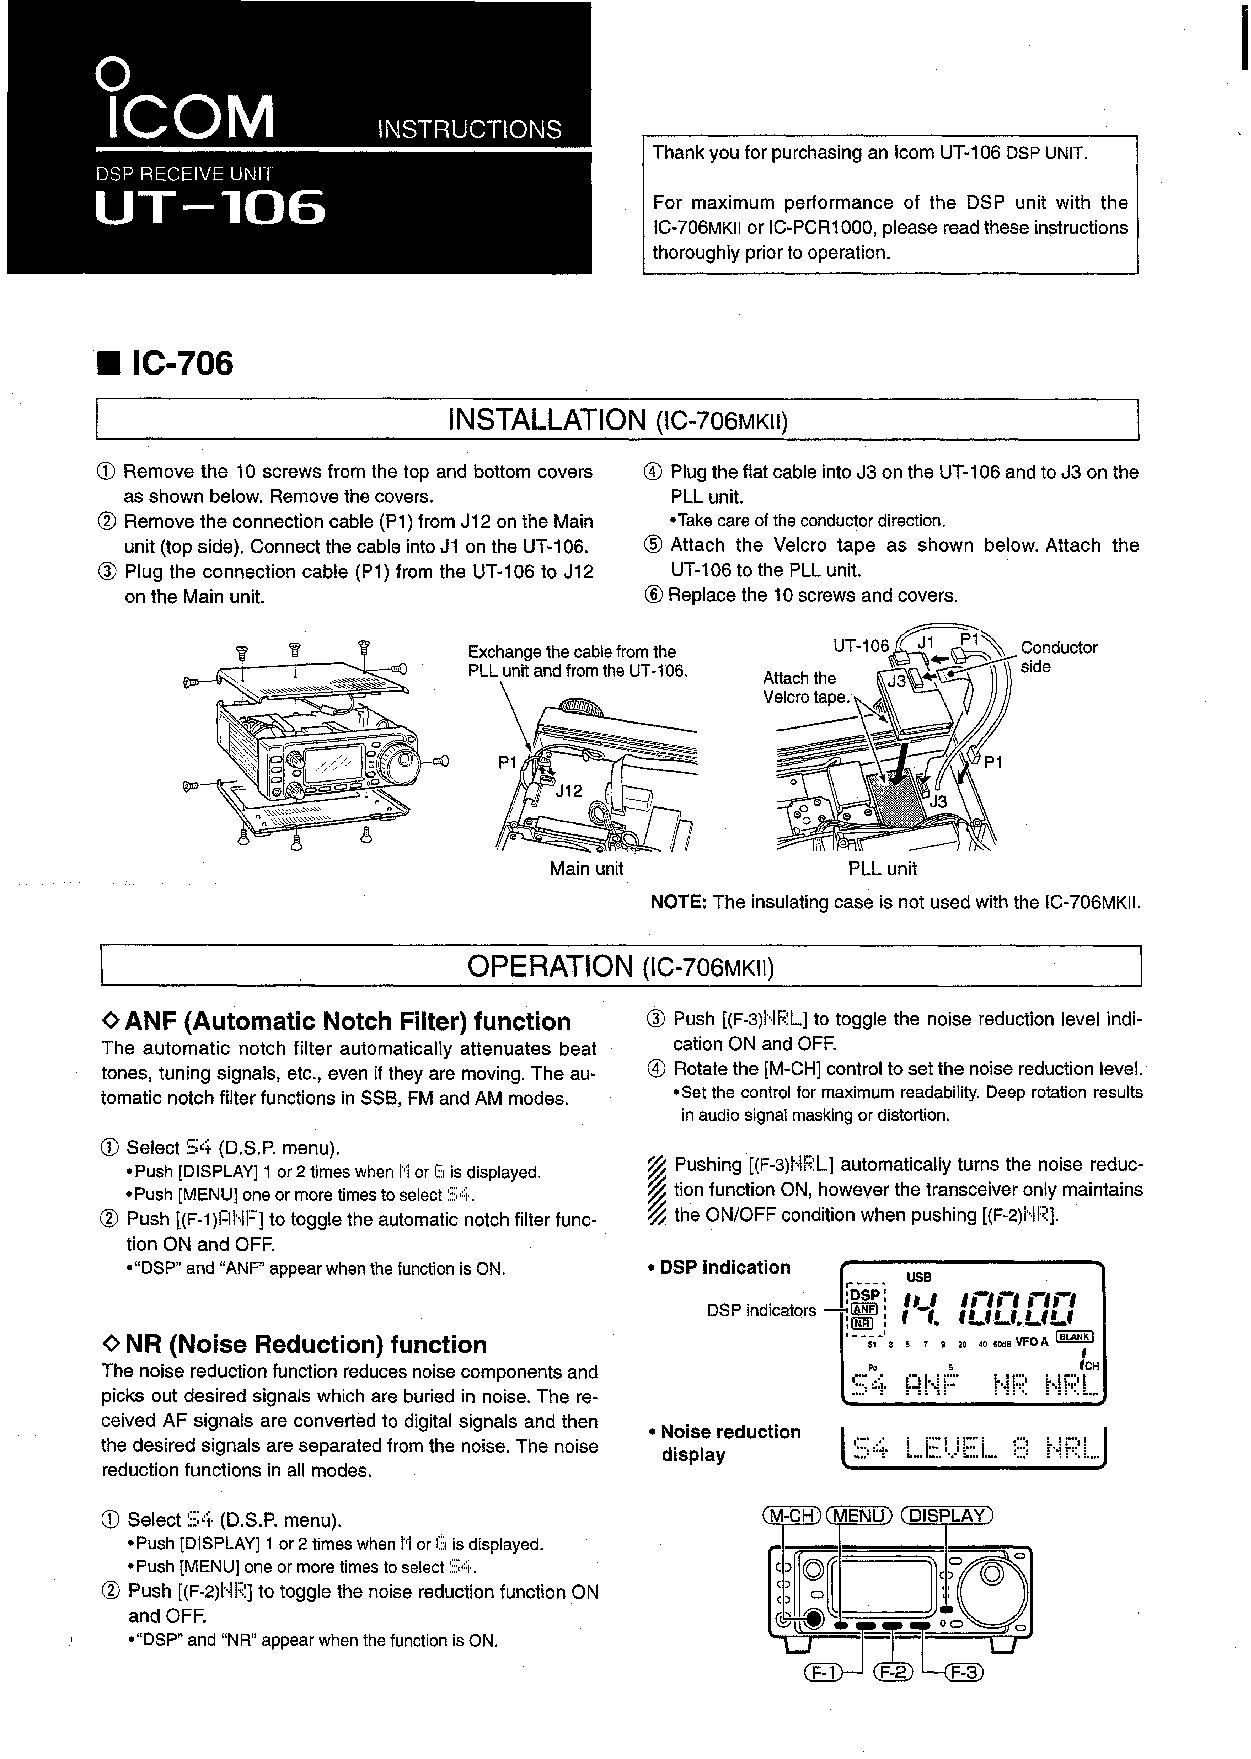 Icom UT-106 User Manual